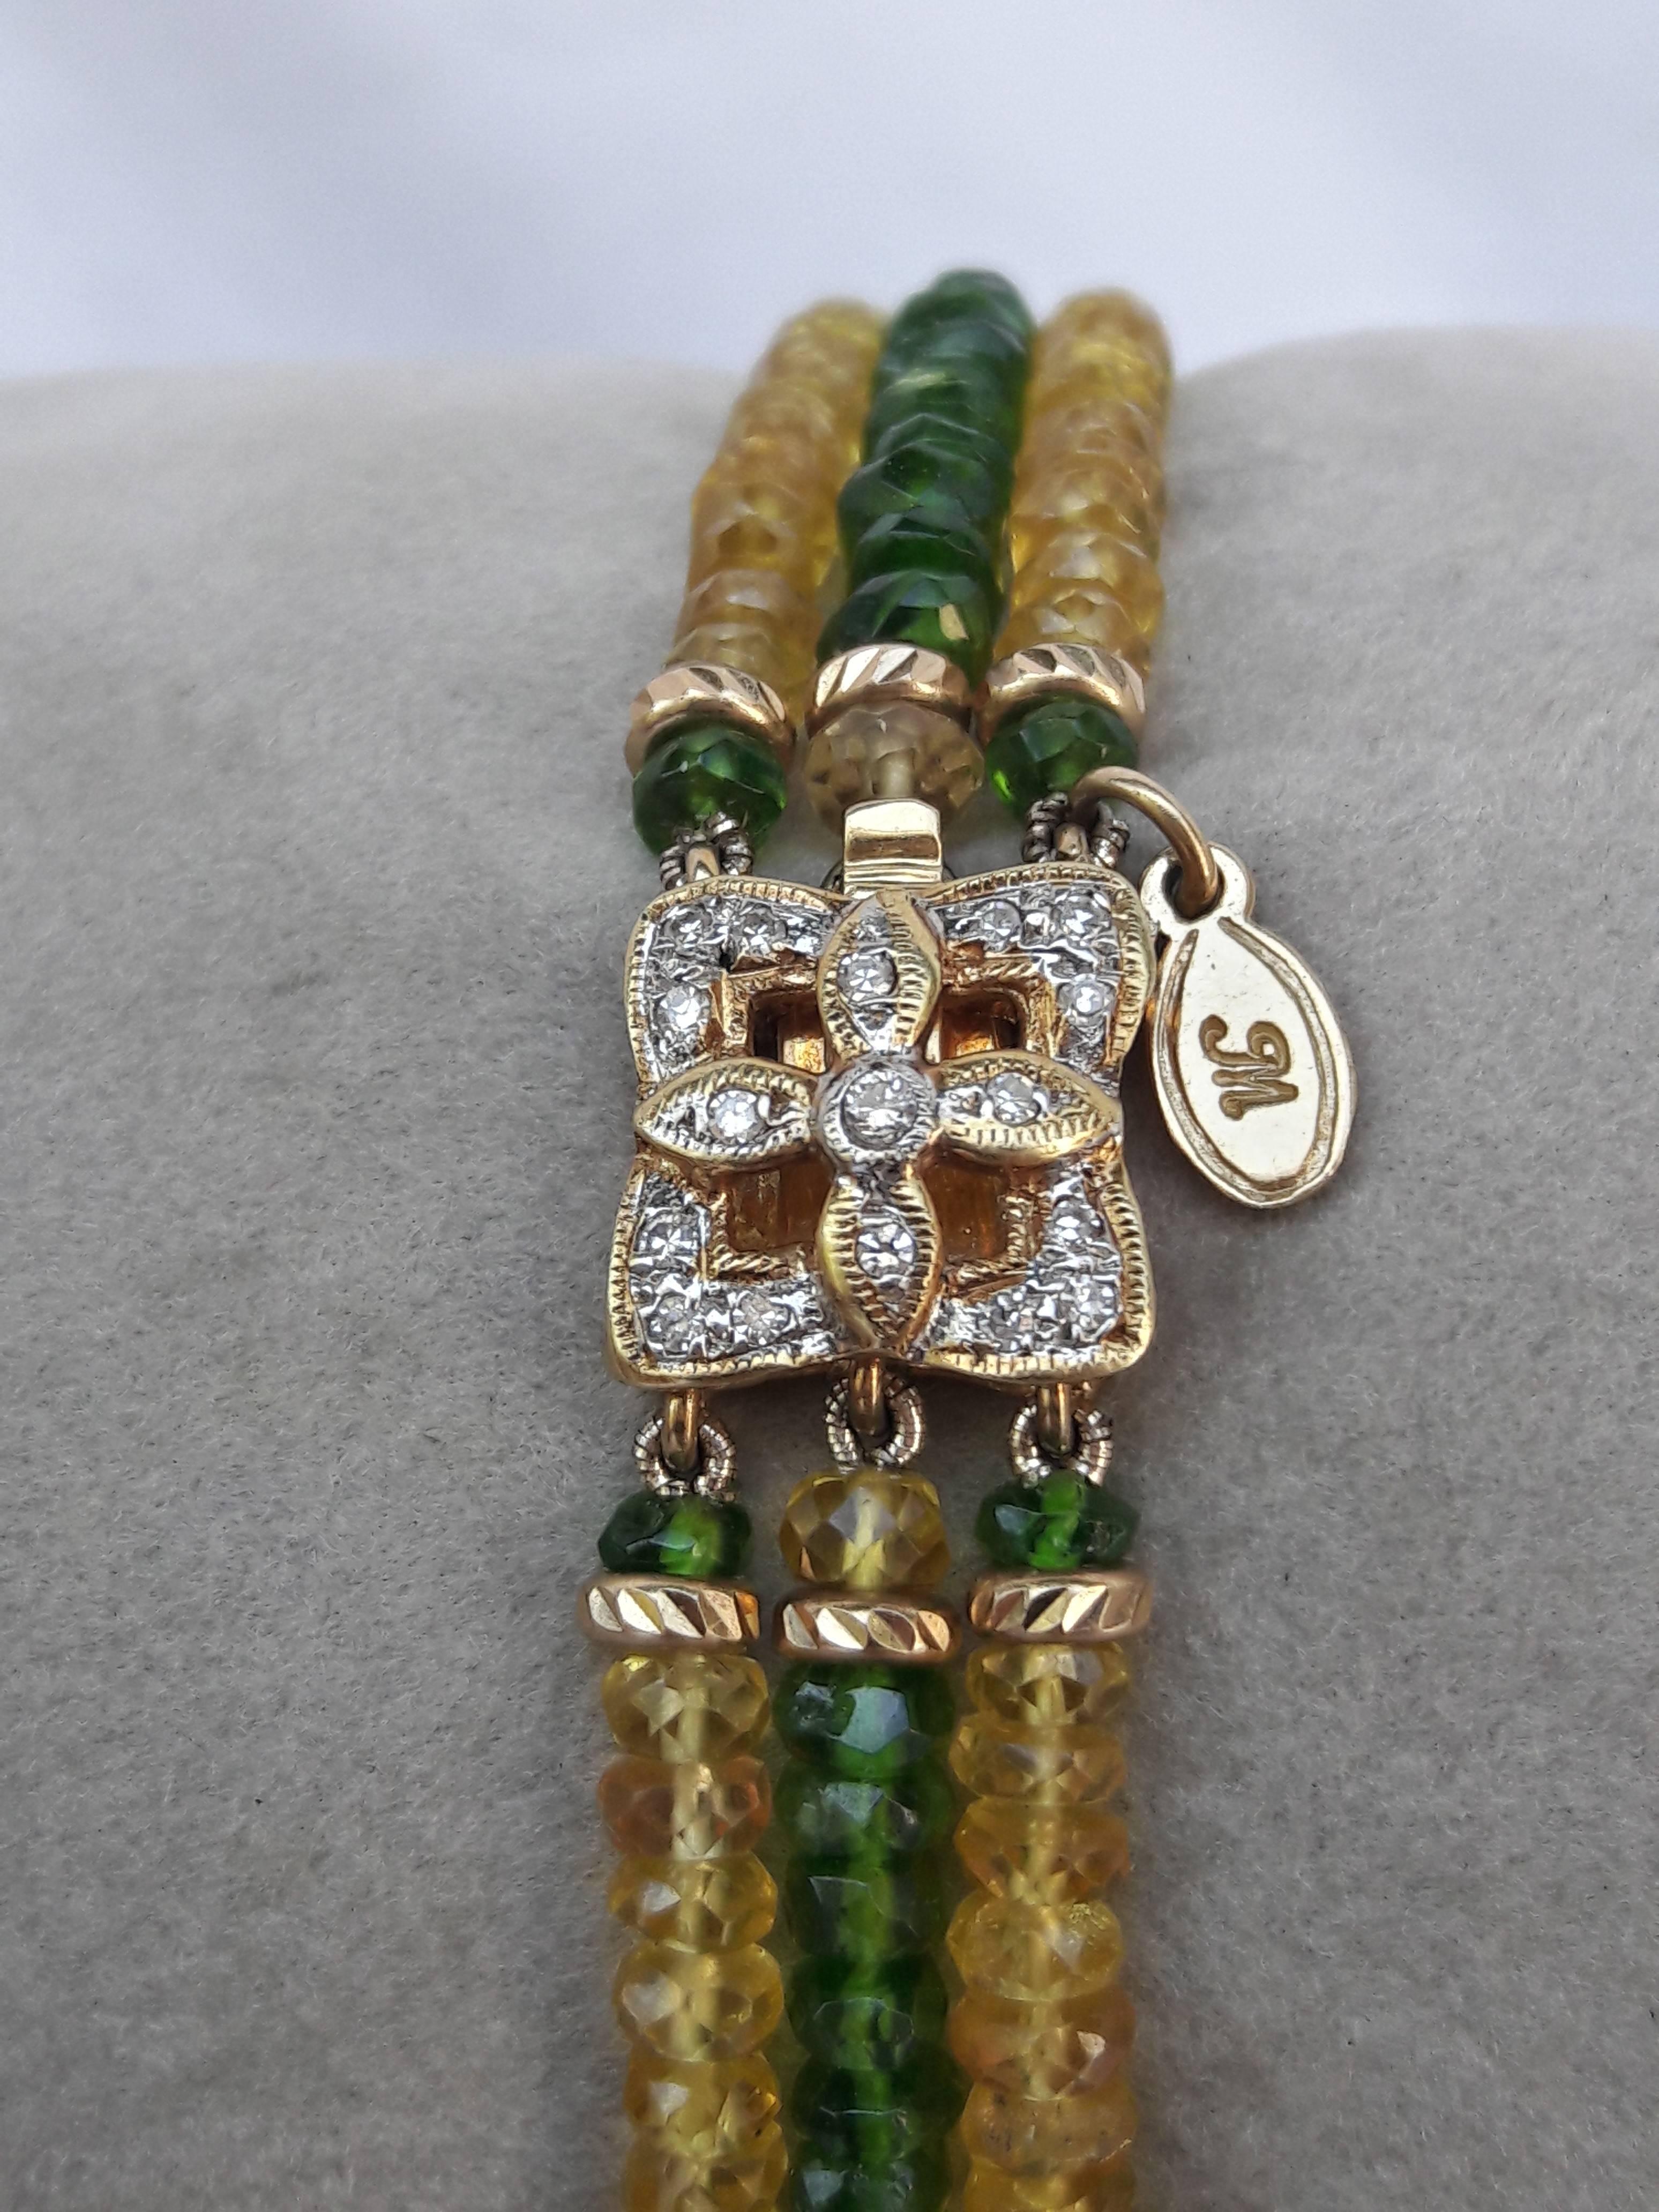 Artist Tsavorite Citrine Faceted Bead Bracelet with Diamond Gold Clasp Centre